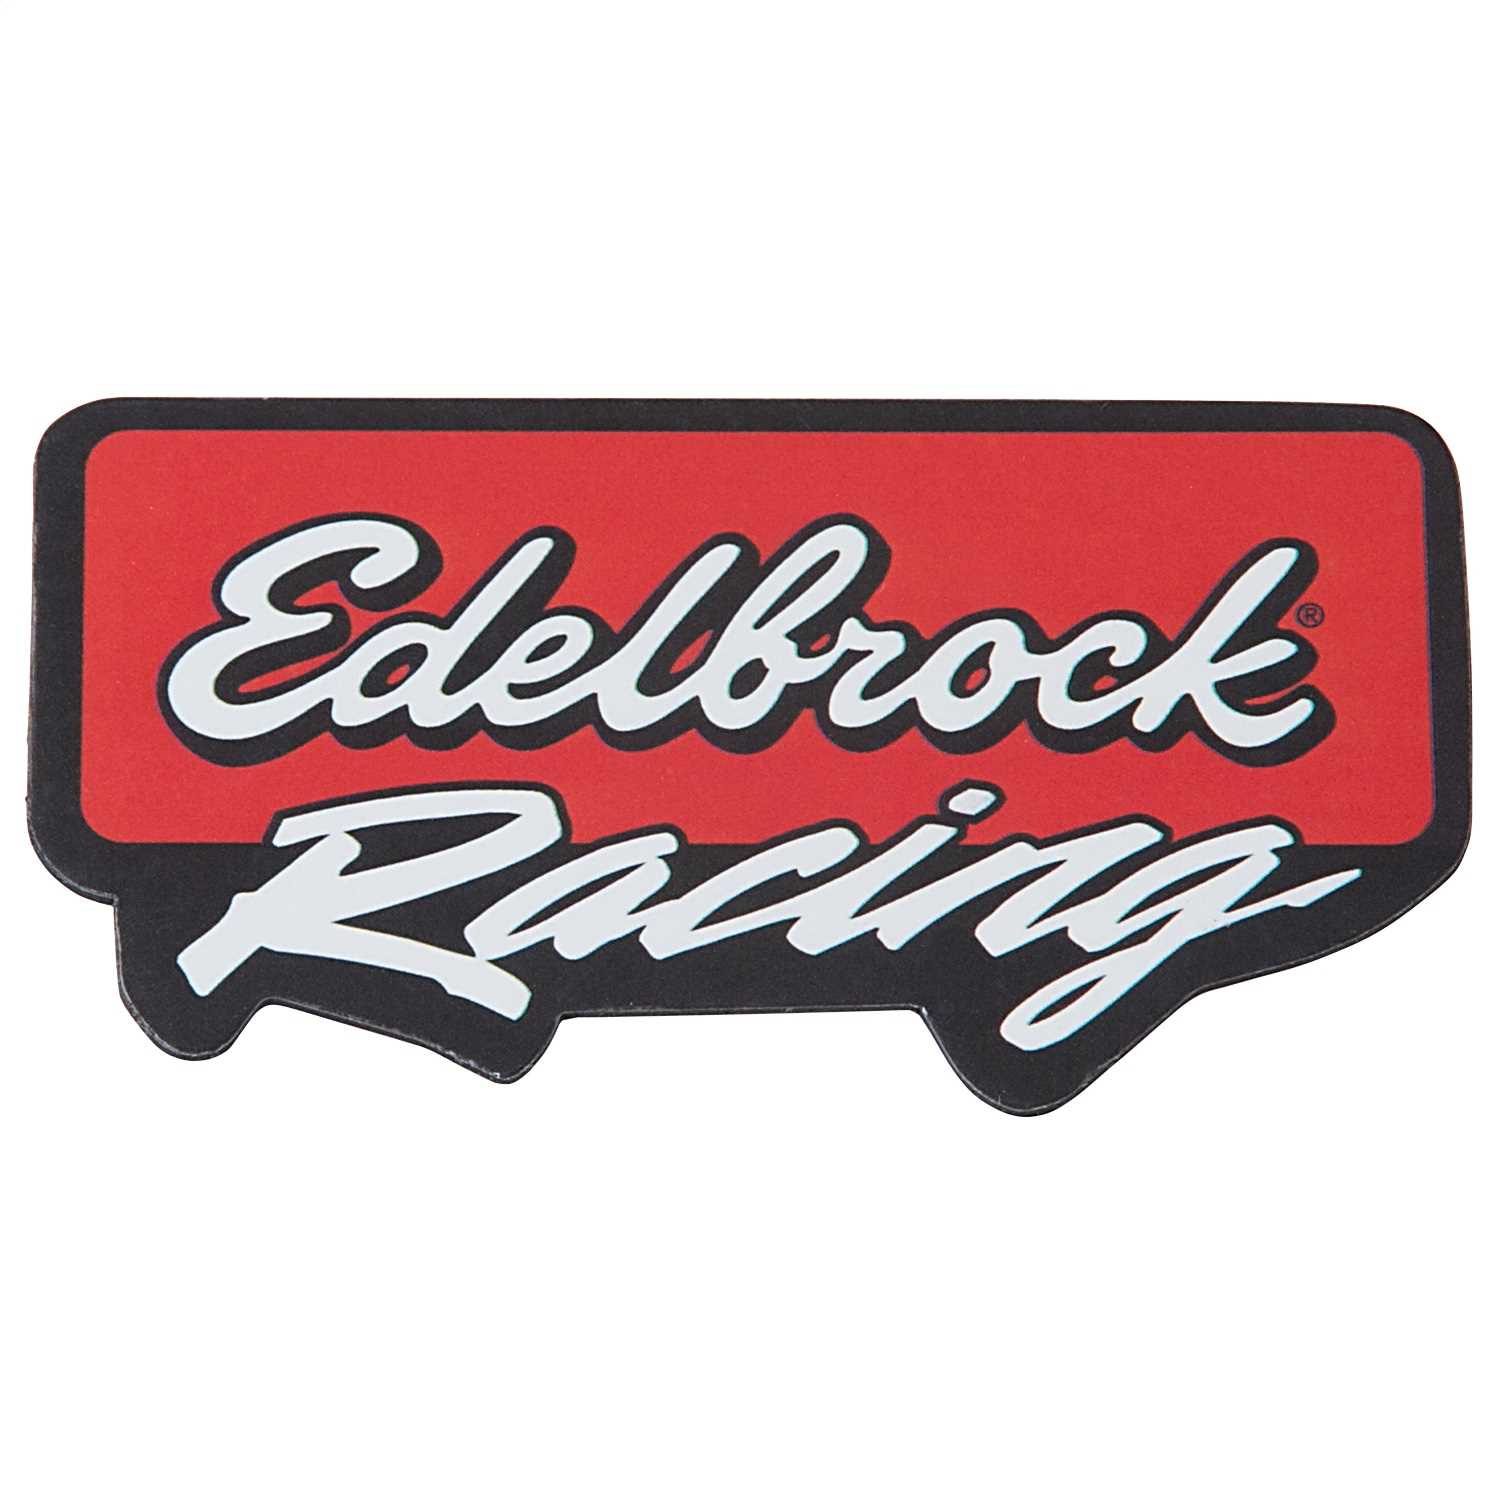 Edelbrock Logo - Edelbrock Magnet 9100 9100